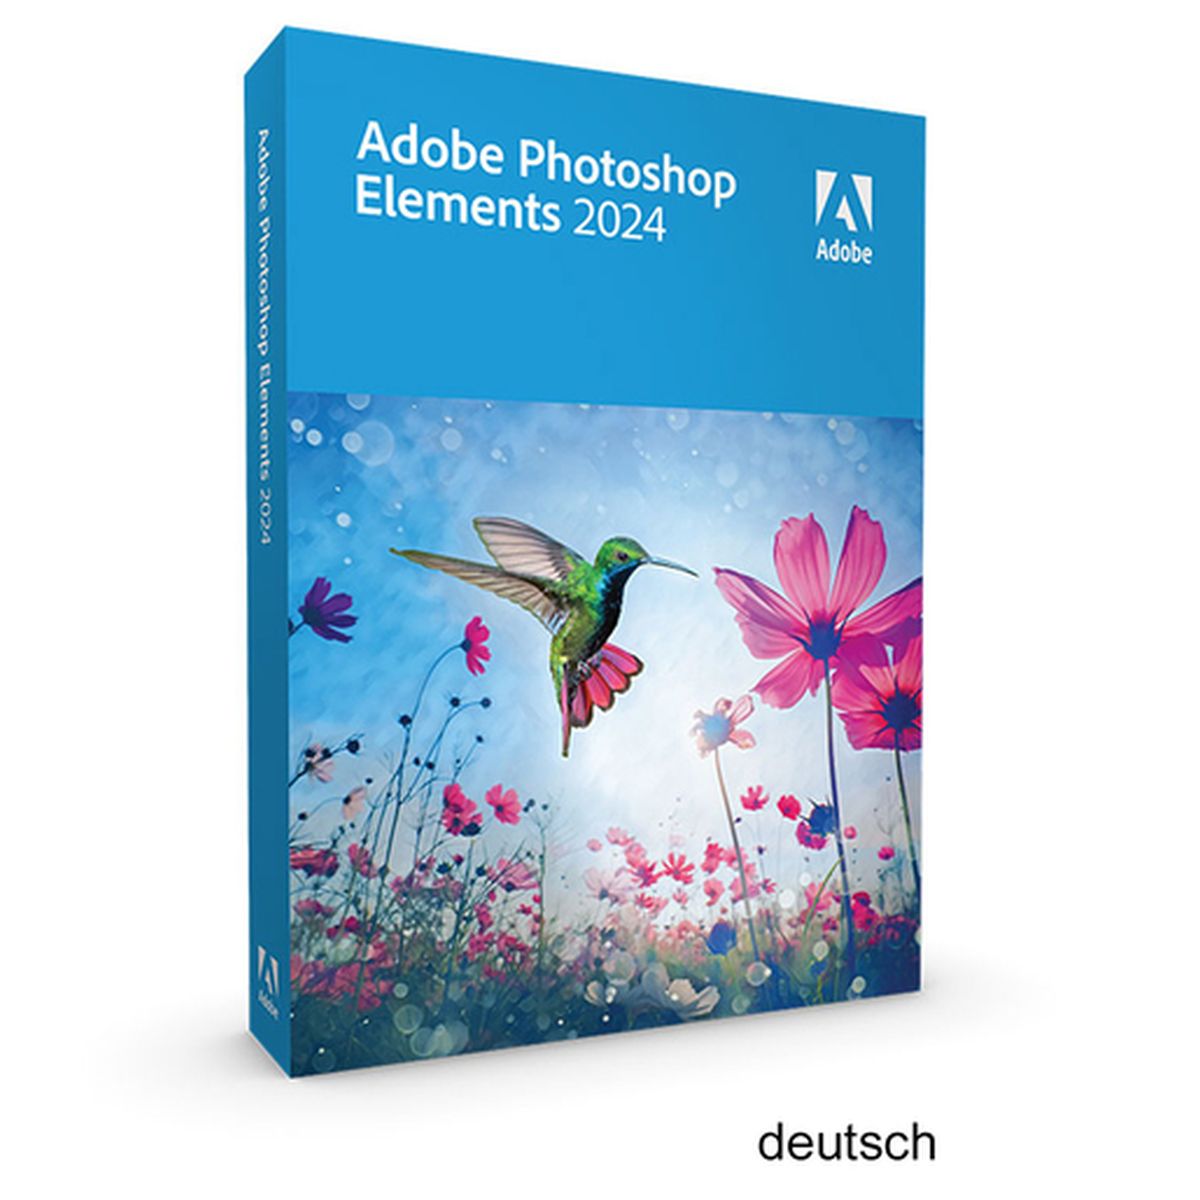 Adobe Photoshop Elements 2024 